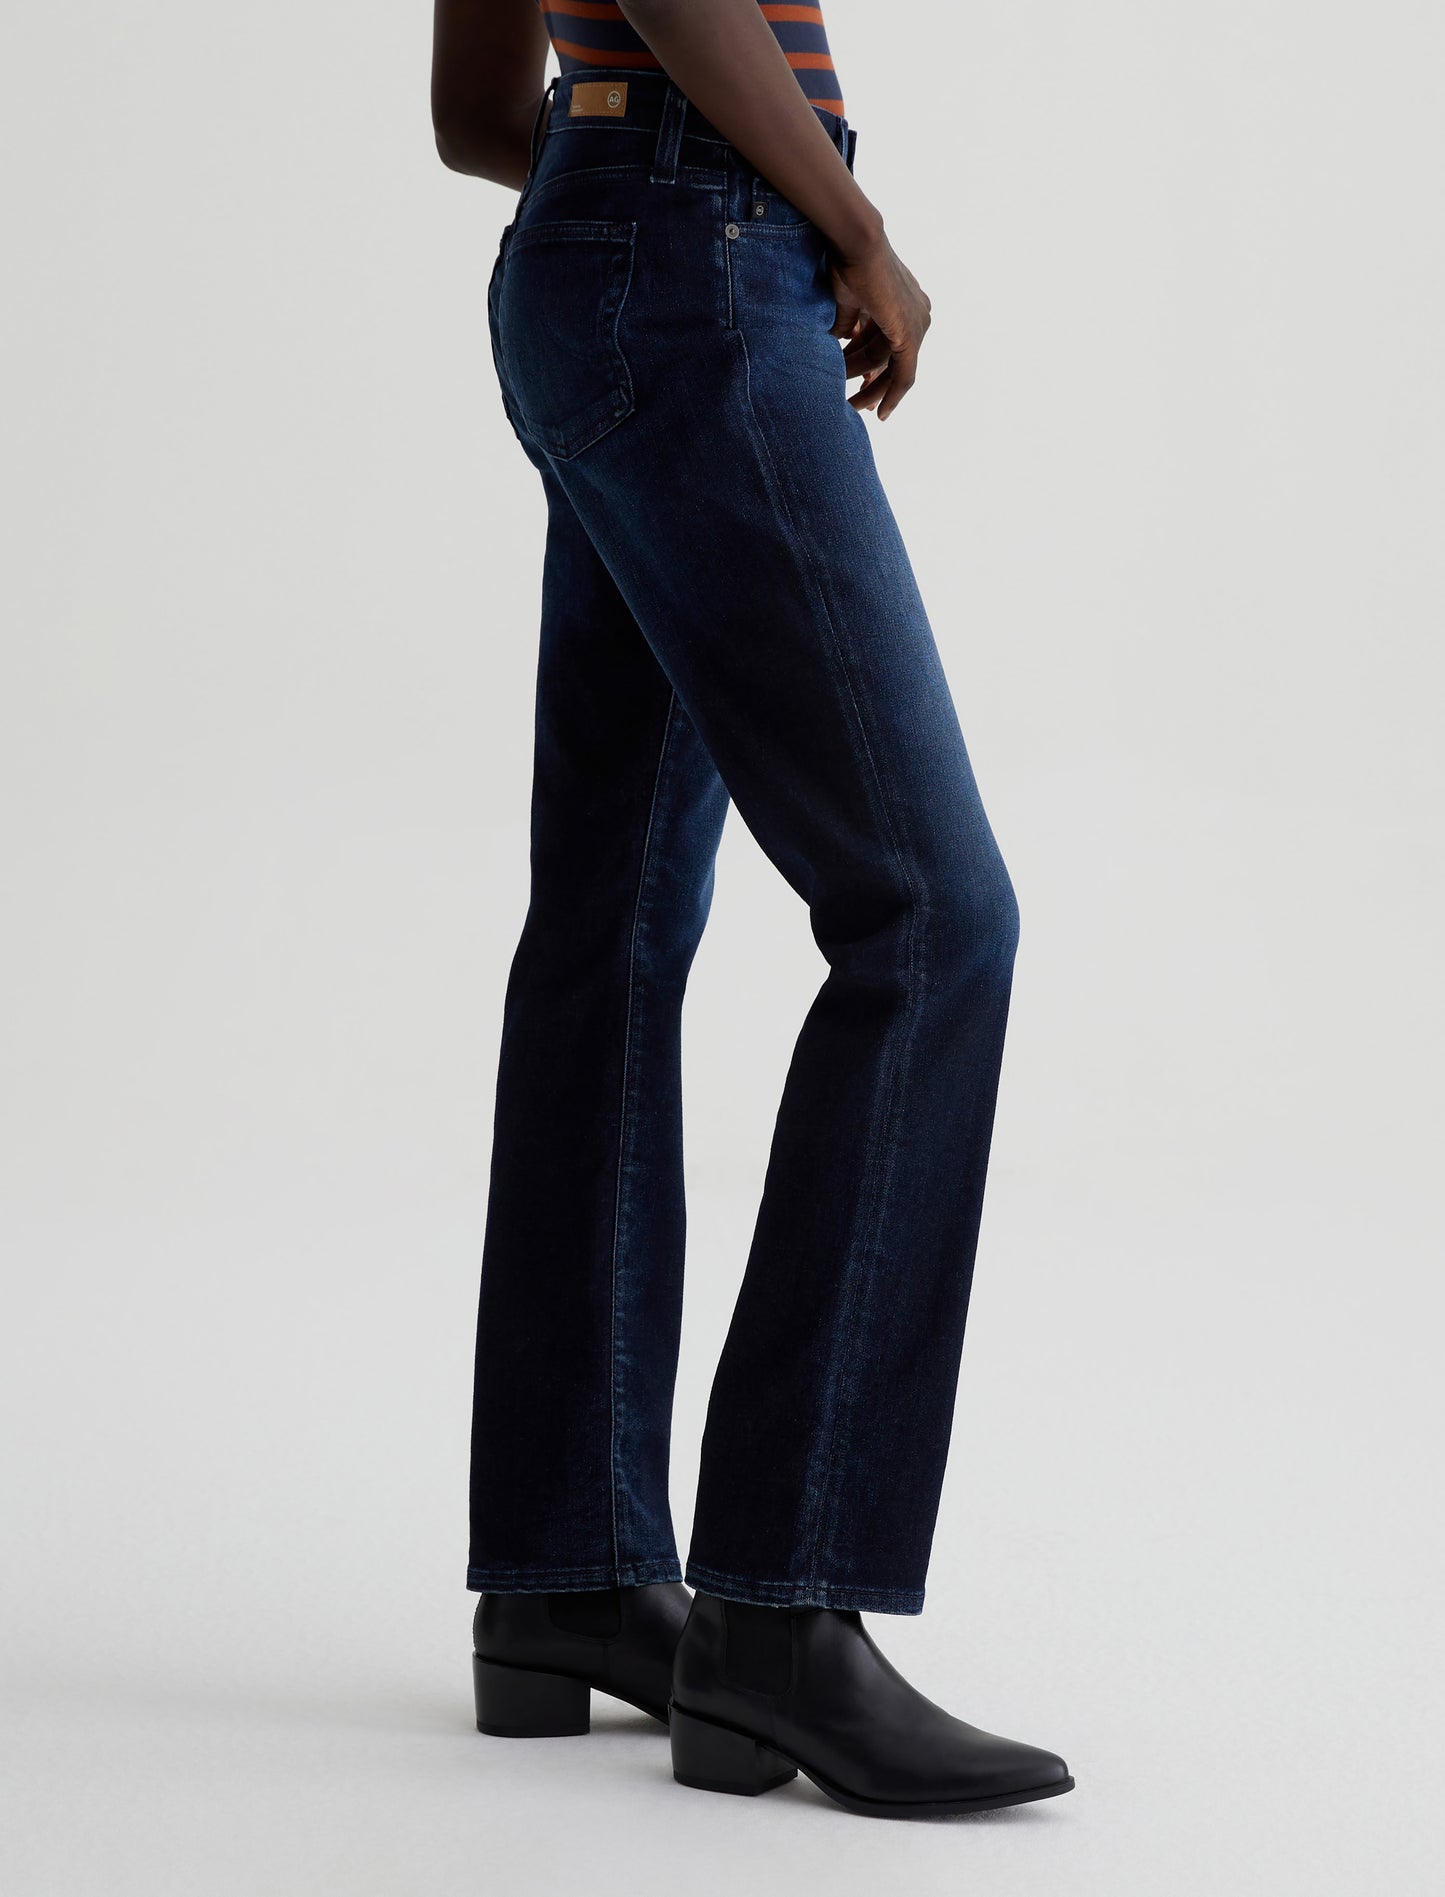 AG Mari Jeans - Premium Jean from Marina St Barth - Just $225! Shop now at Marina St Barth